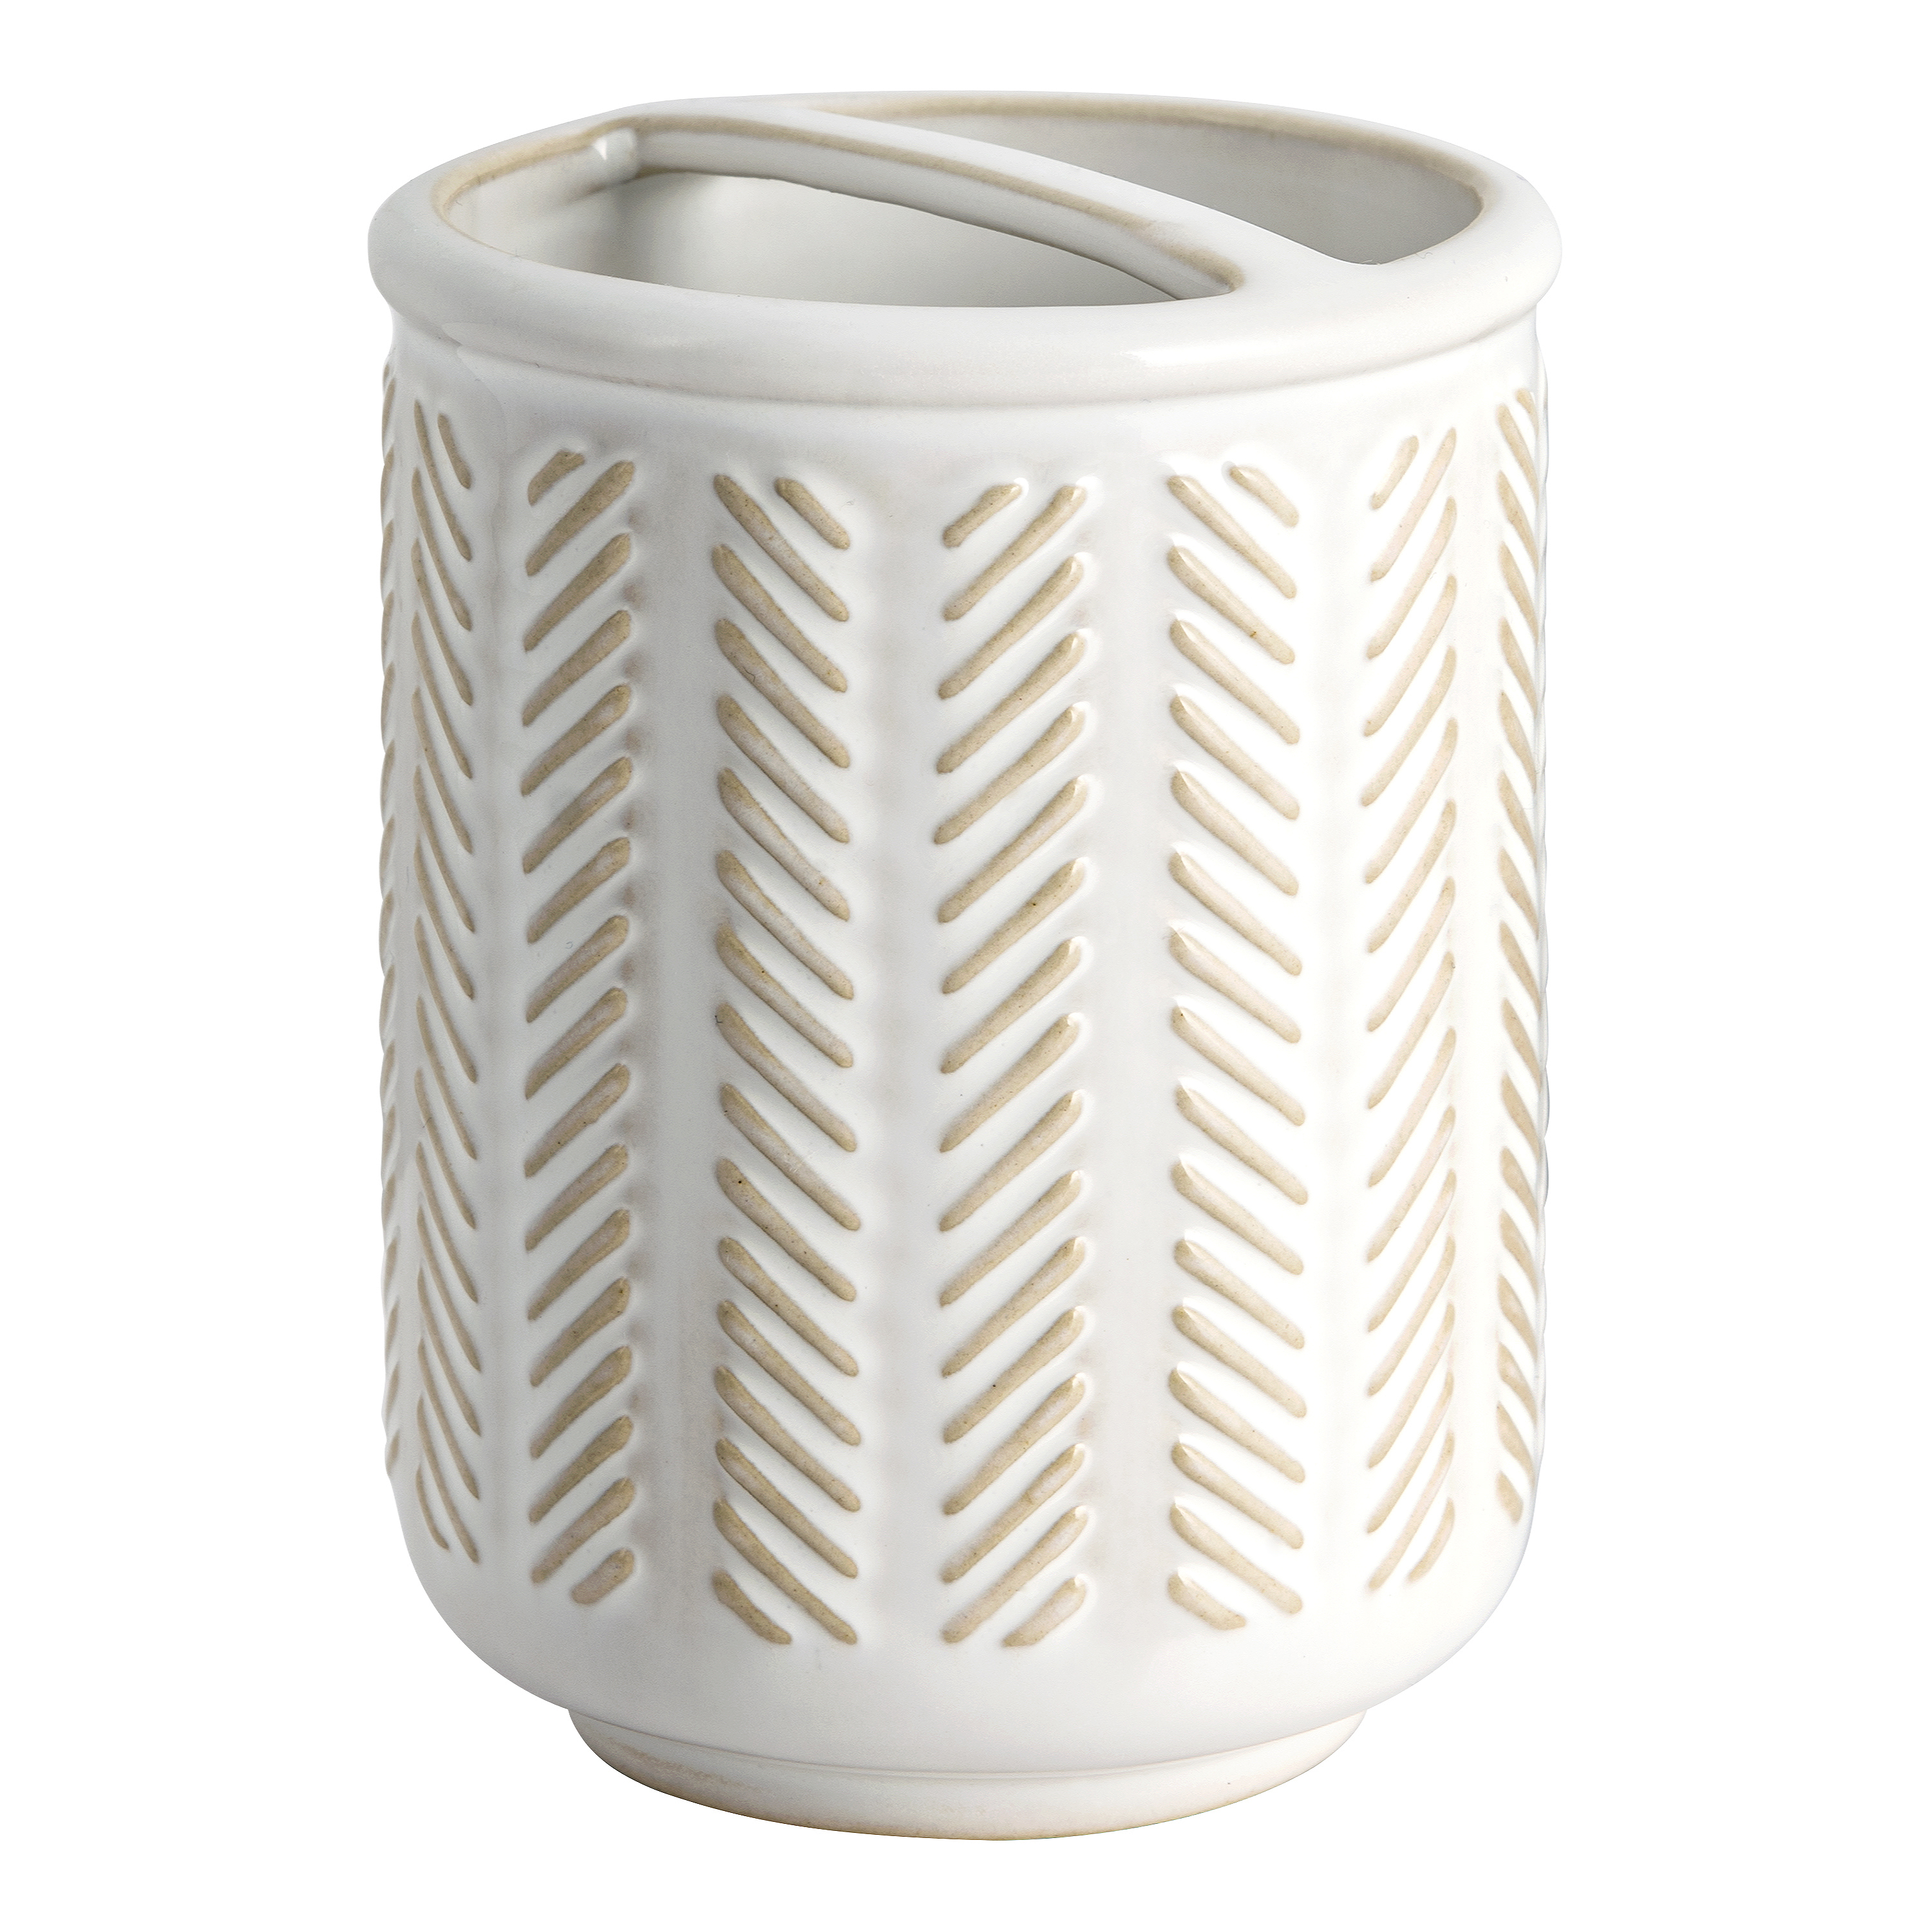 Better Homes & Gardens Reactive Glazed Textured Ceramic Toothbrush Holder in Creamy White - image 1 of 6